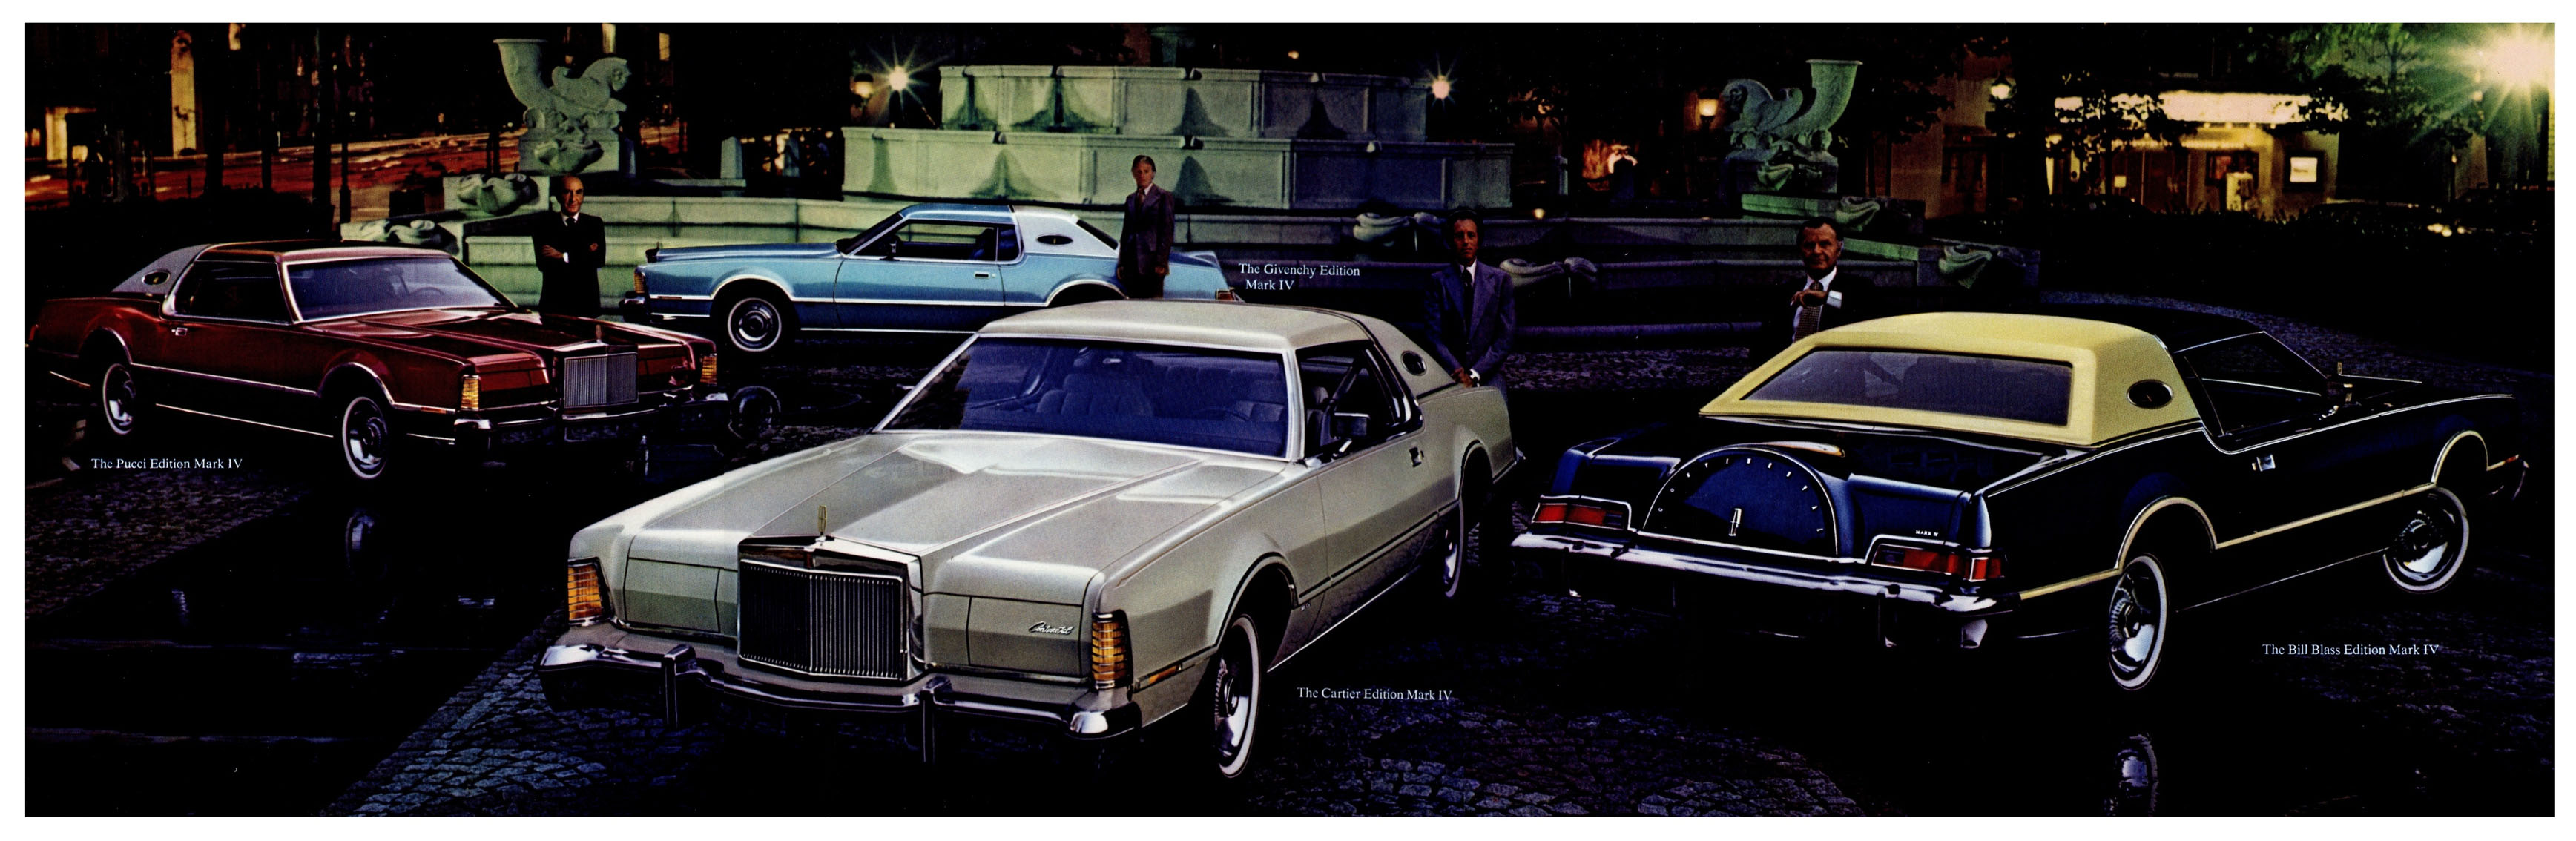 1976_Lincoln_Continental_Mark_IV-03